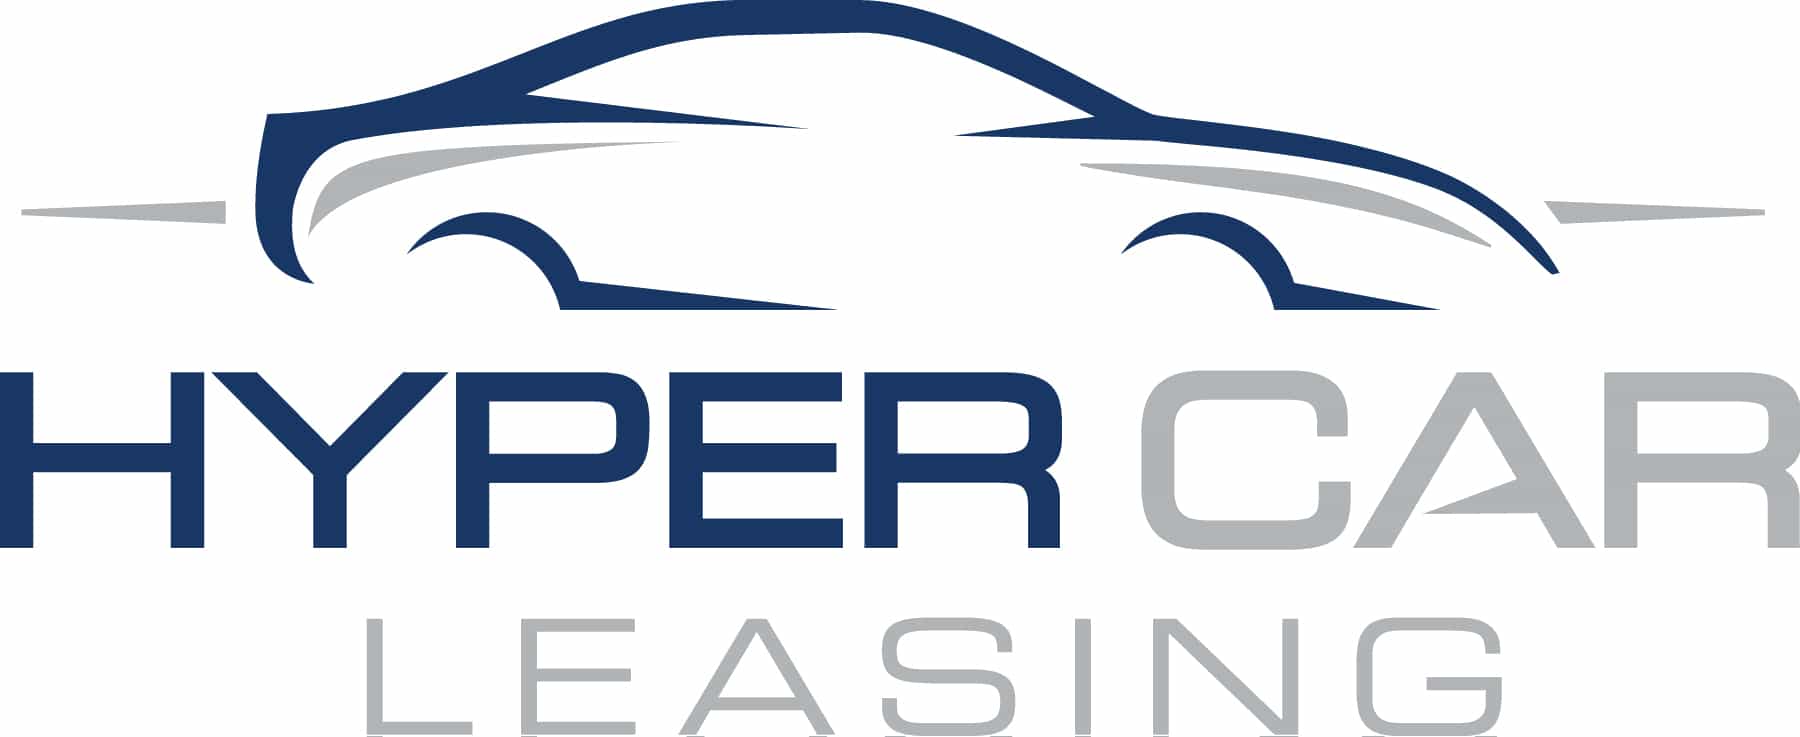 Sleek Car Logo - Car Leasing Company Logo Design. How We Designed It